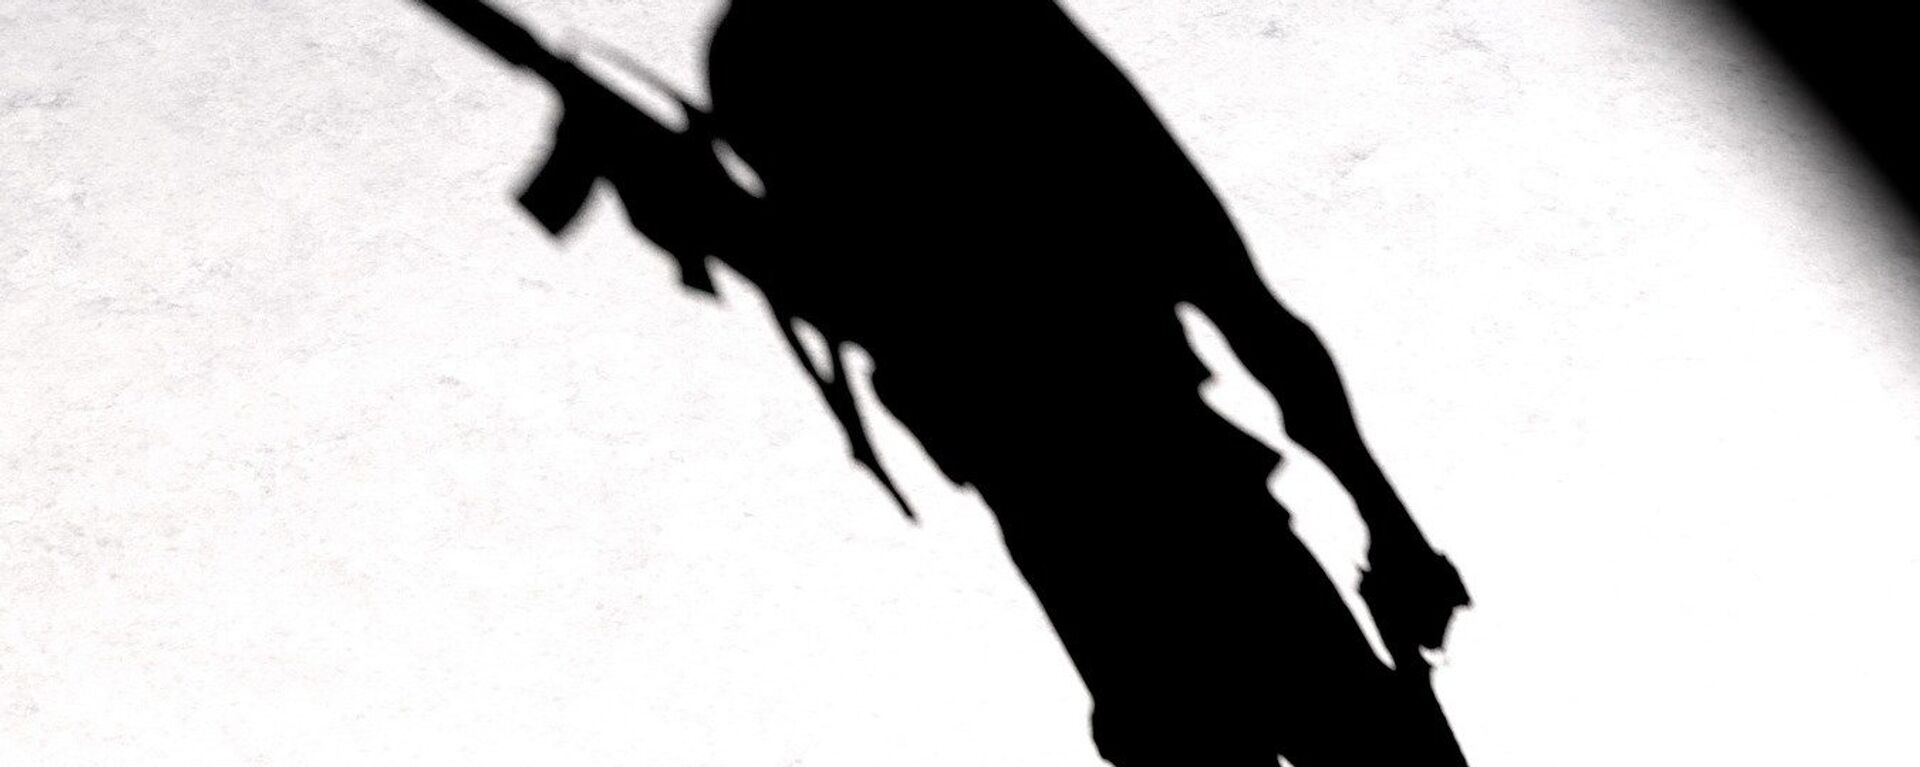 A silhouette of a man with a gun - Sputnik International, 1920, 02.05.2019